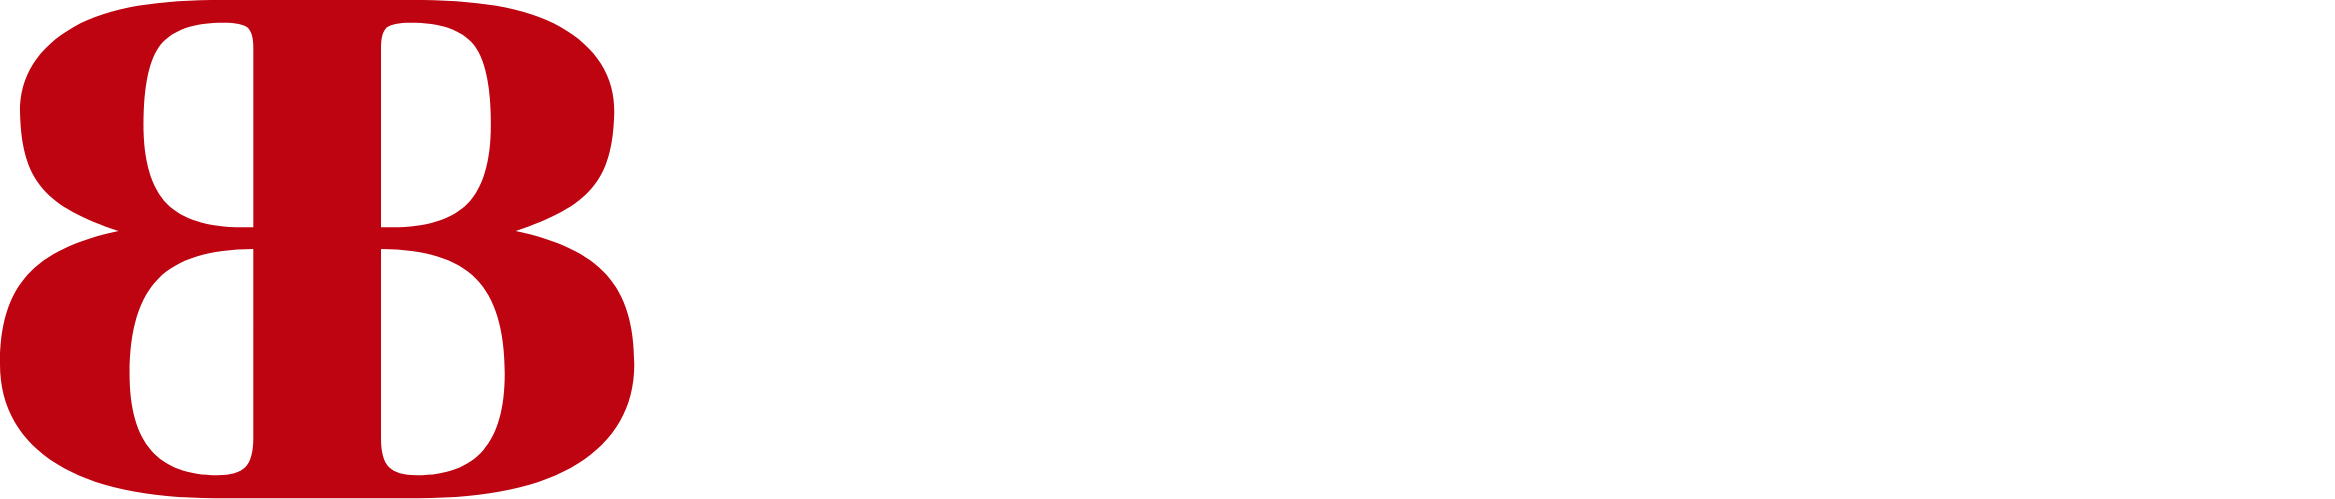 Banco del Bajío logo grand pour les fonds sombres (PNG transparent)